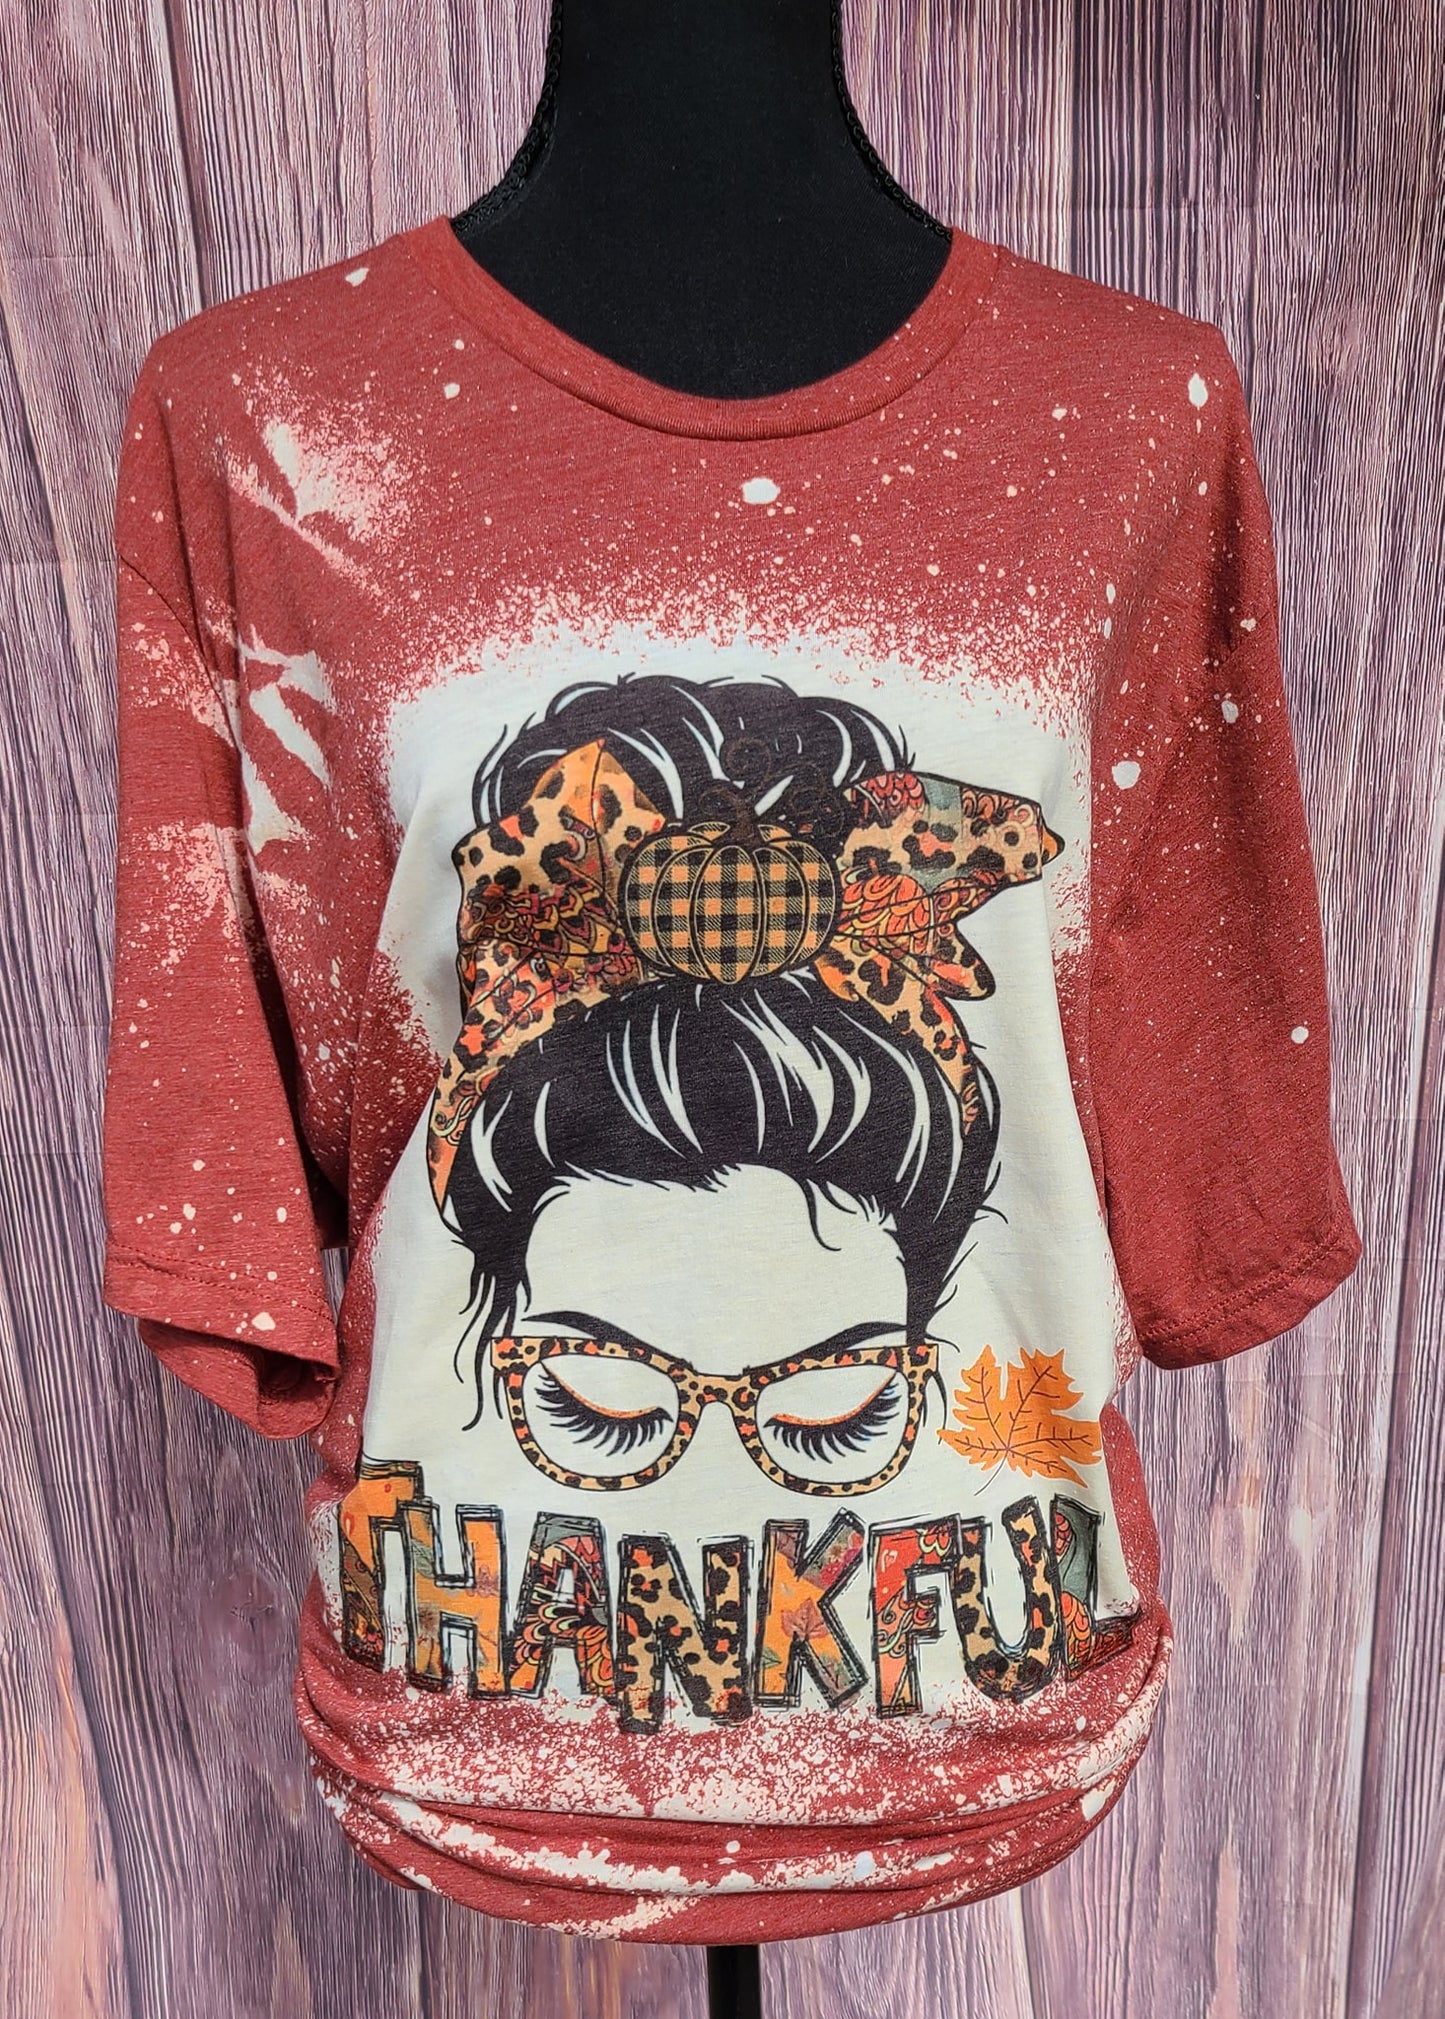 "Thankful" Bleached T-Shirt